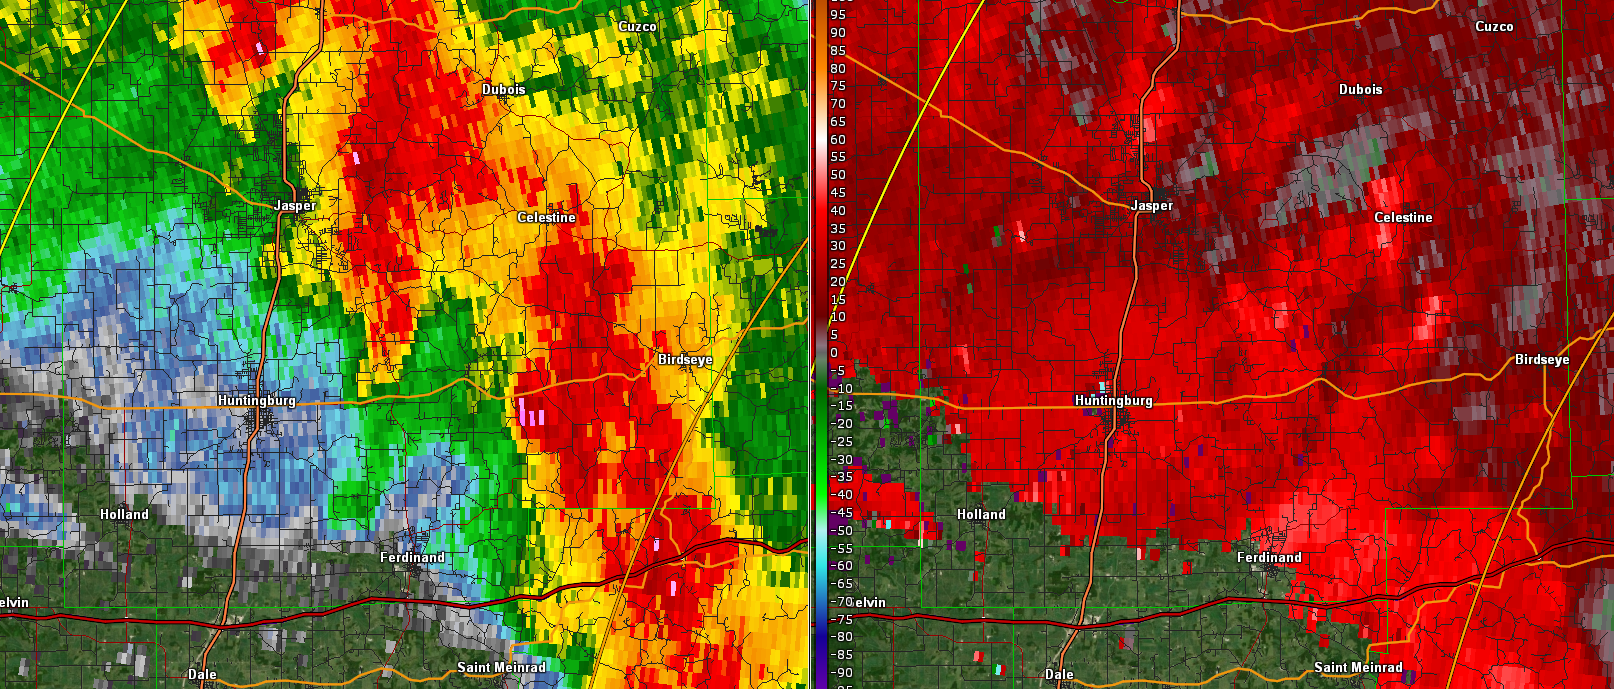 Dubois County radar image